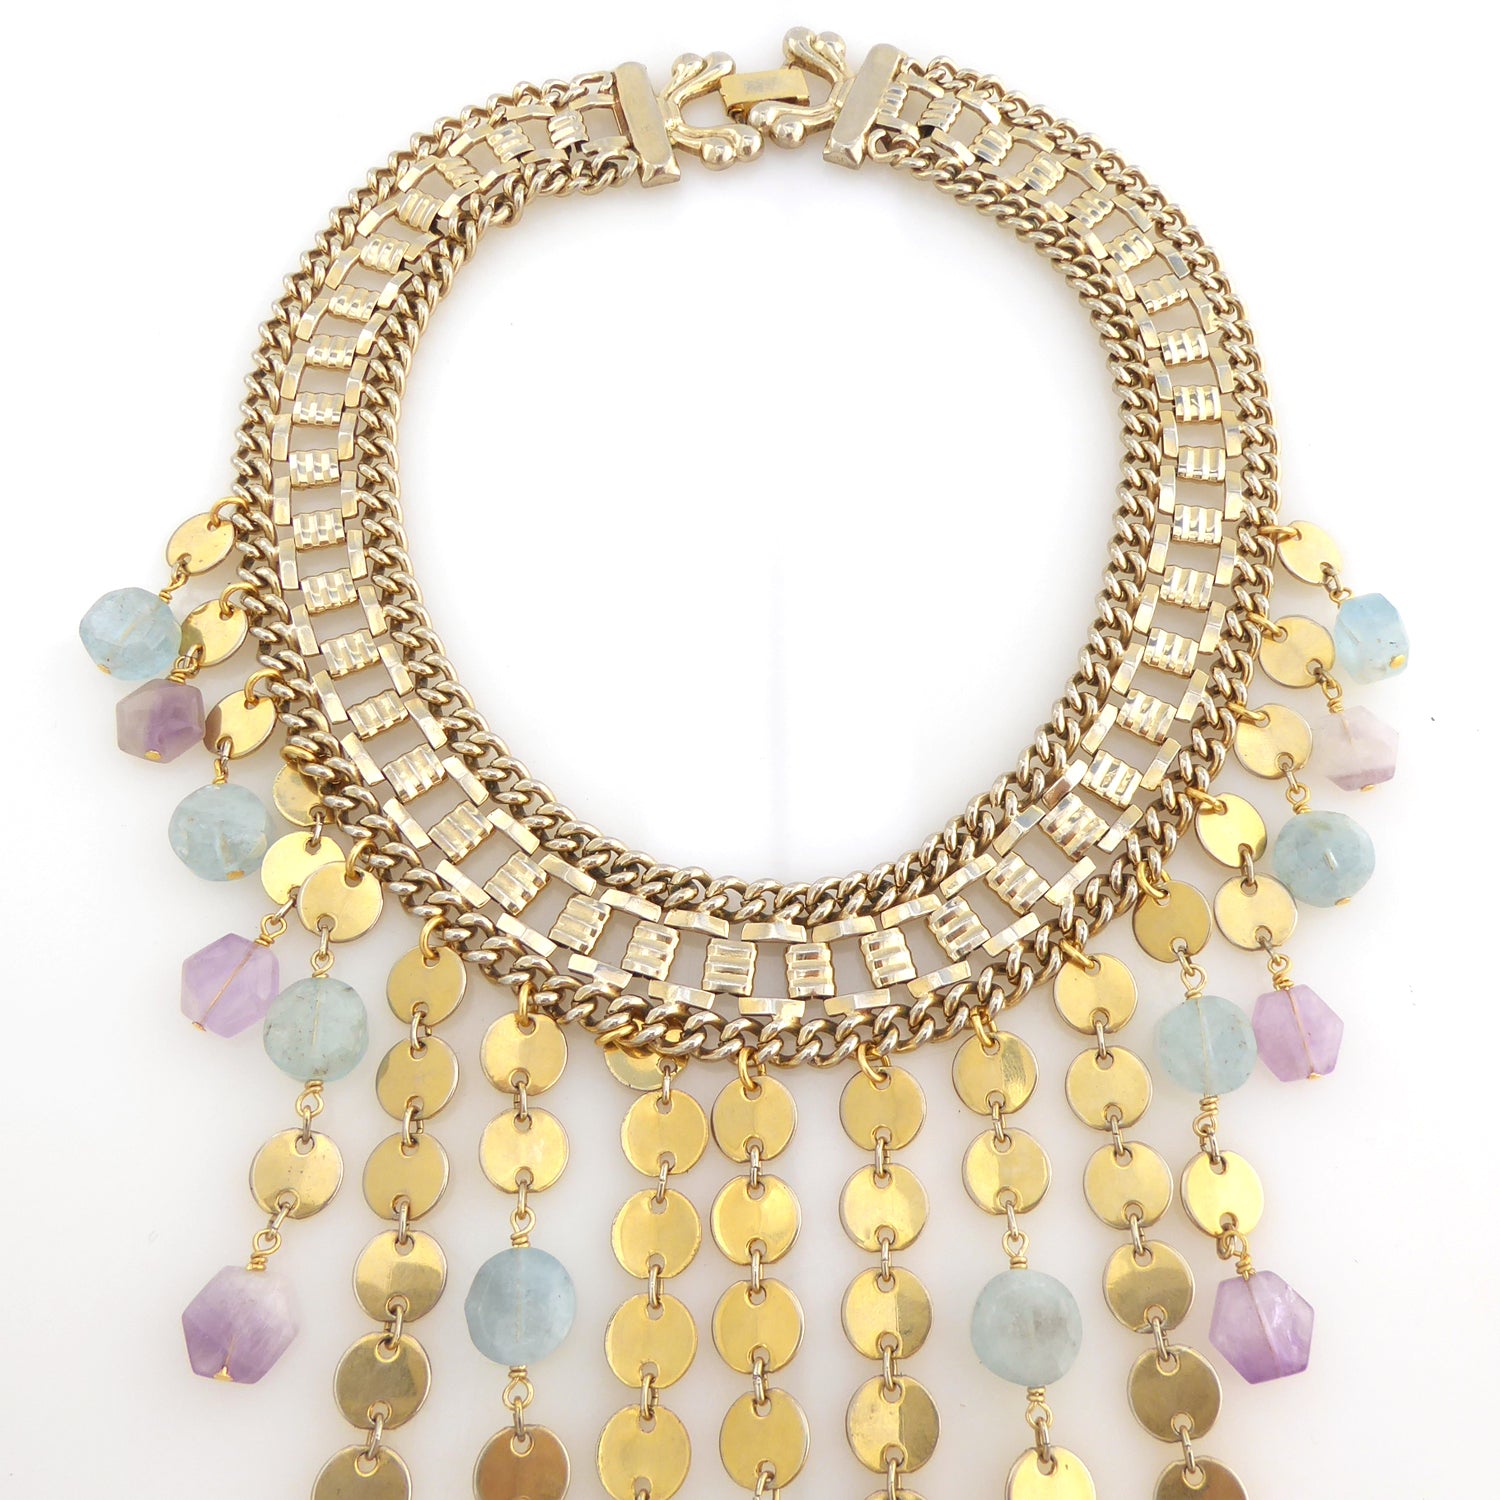 Carmeline aquamarine and amethyst necklace by Jenny Dayco 4